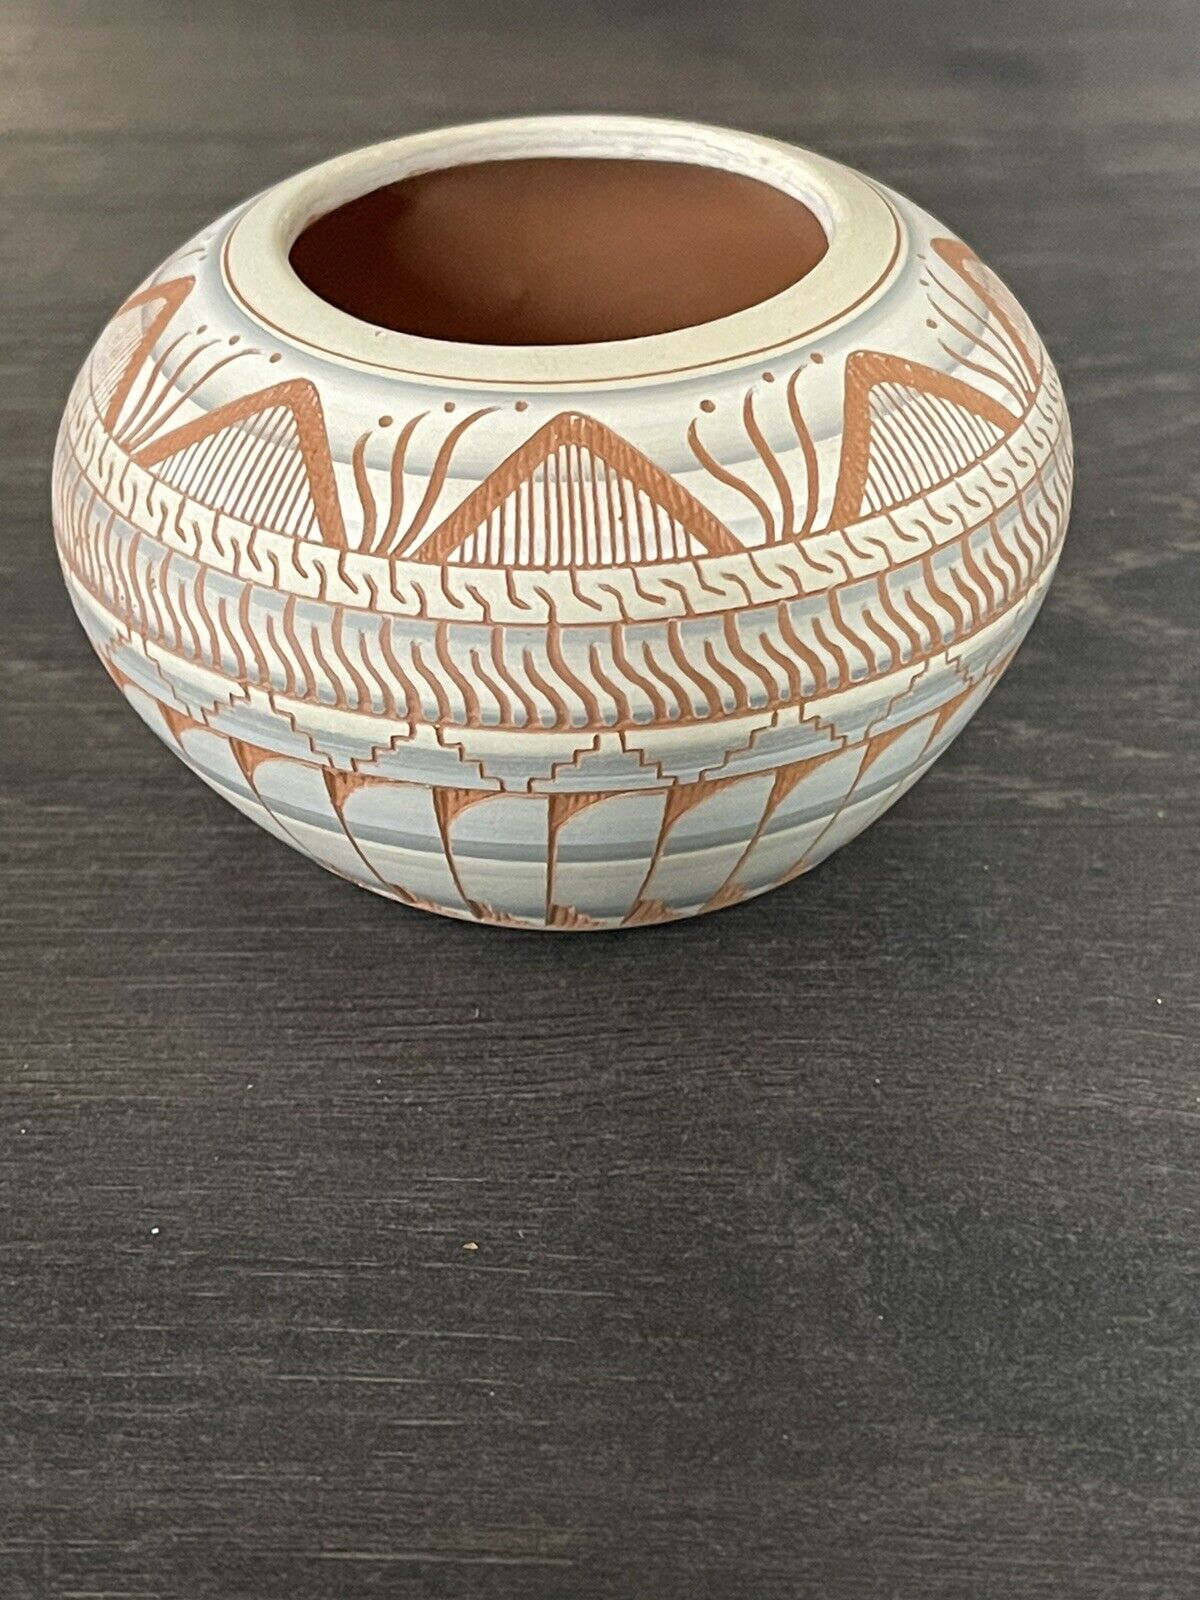 Navajo pottery 4”x2.5” red clay by E. Whitegoat Everson Whitegoat